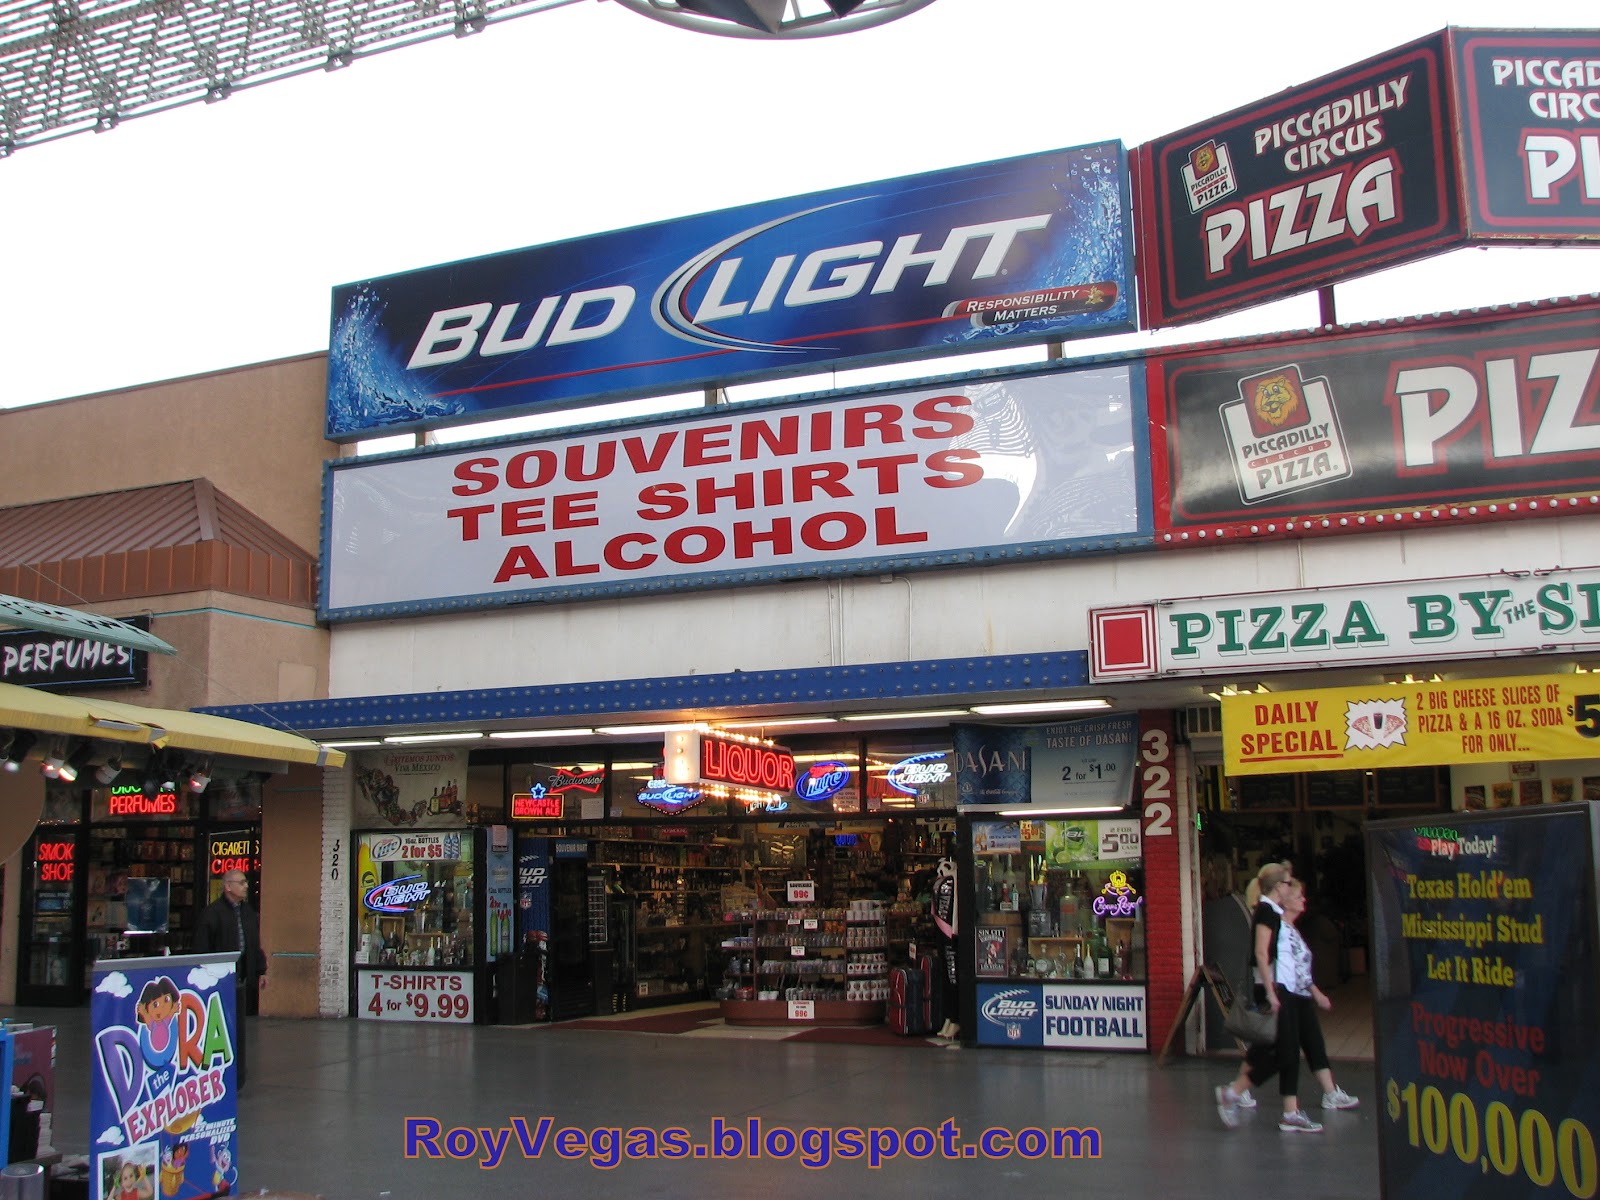 Roy Vegas: Las Vegas Souvenirs, Tee Shirts, Alcohol, Pizza